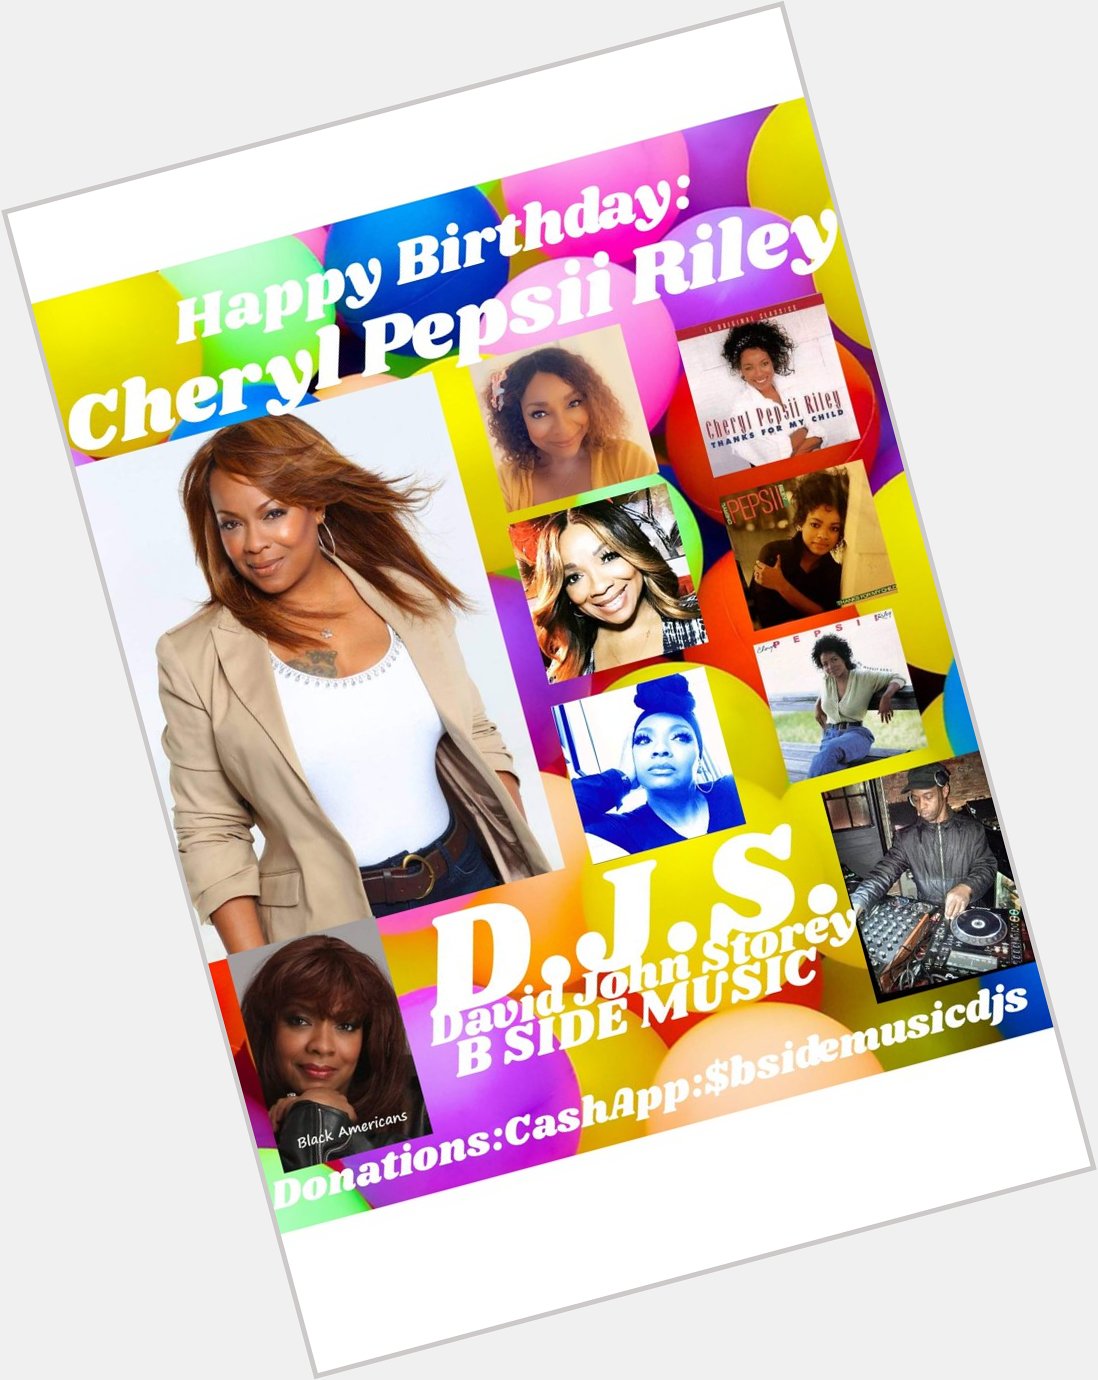 I(D.J.S.) wish Singer/Actress: \"CHERYL PEPSII RILEY\" Happy Birthday!!!! 